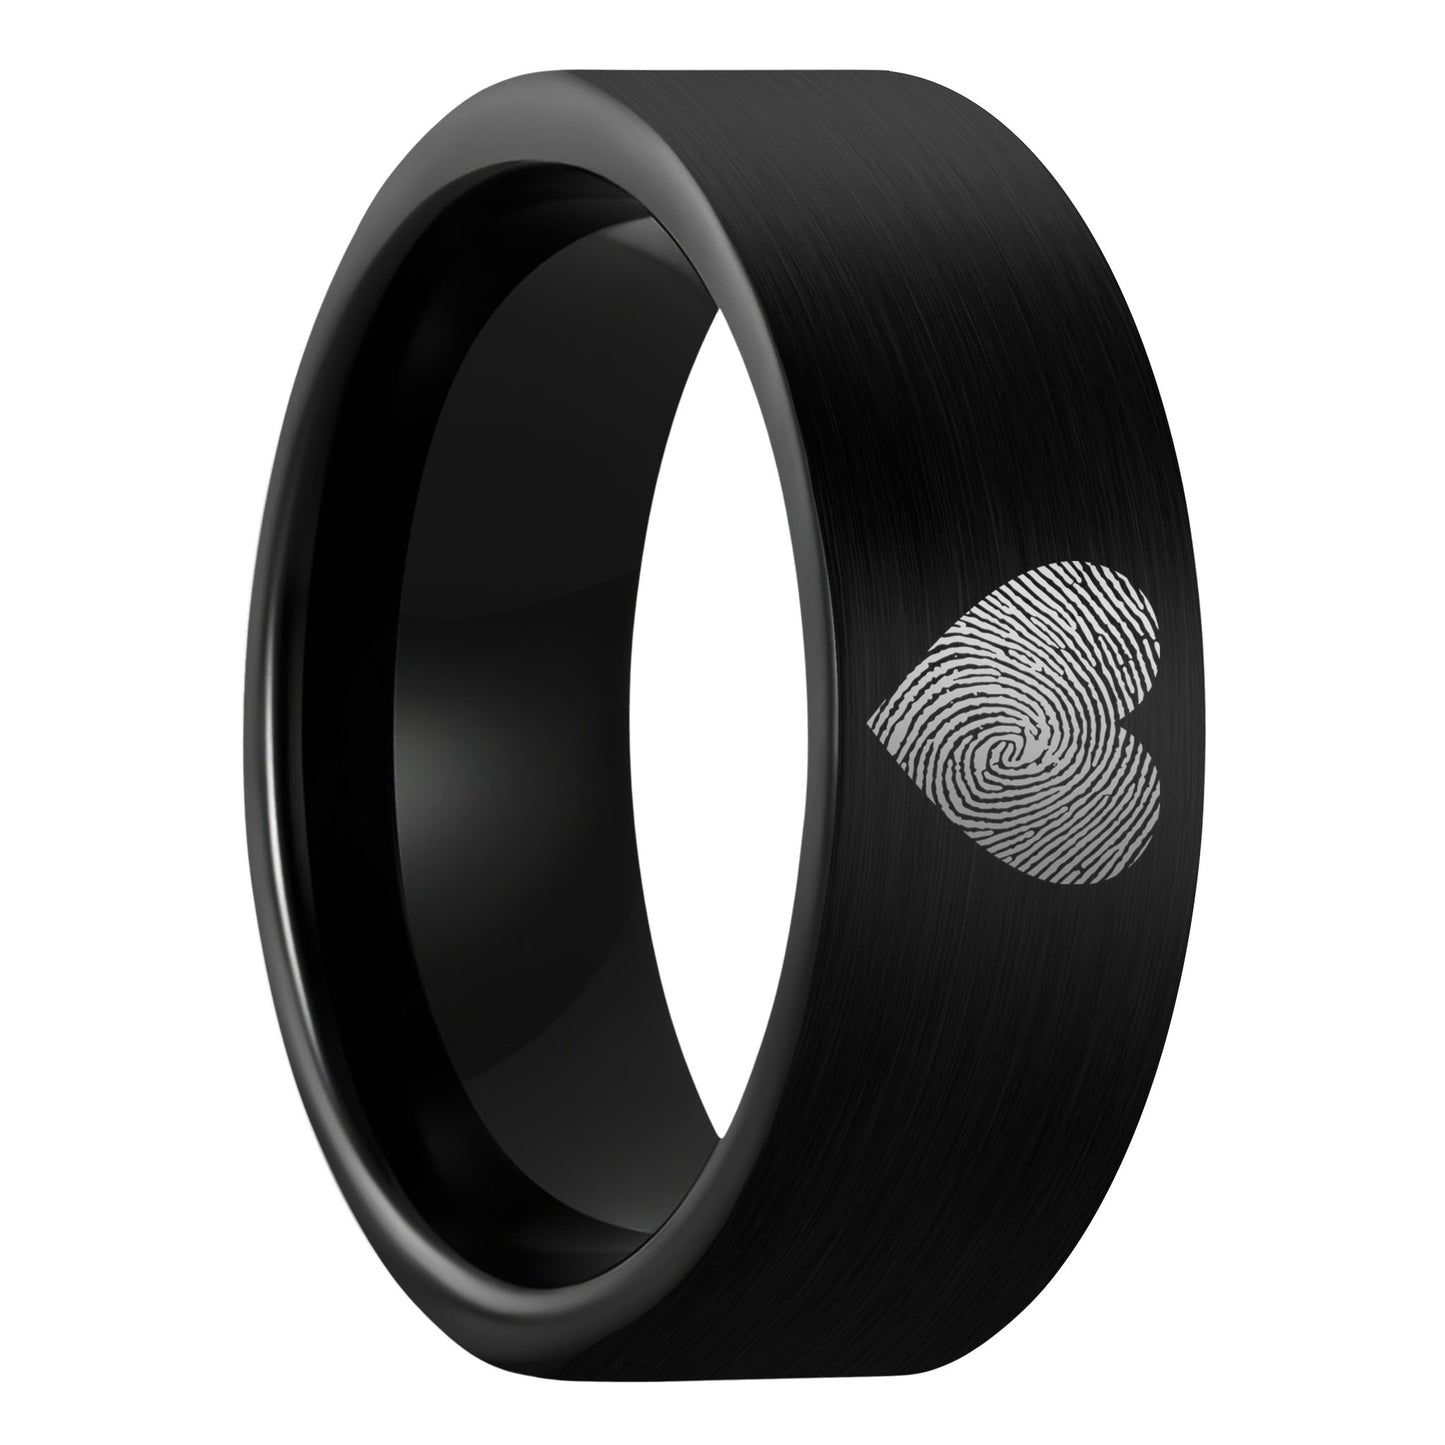 A custom heart fingerprint brushed black tungsten men's wedding band displayed on a plain white background.